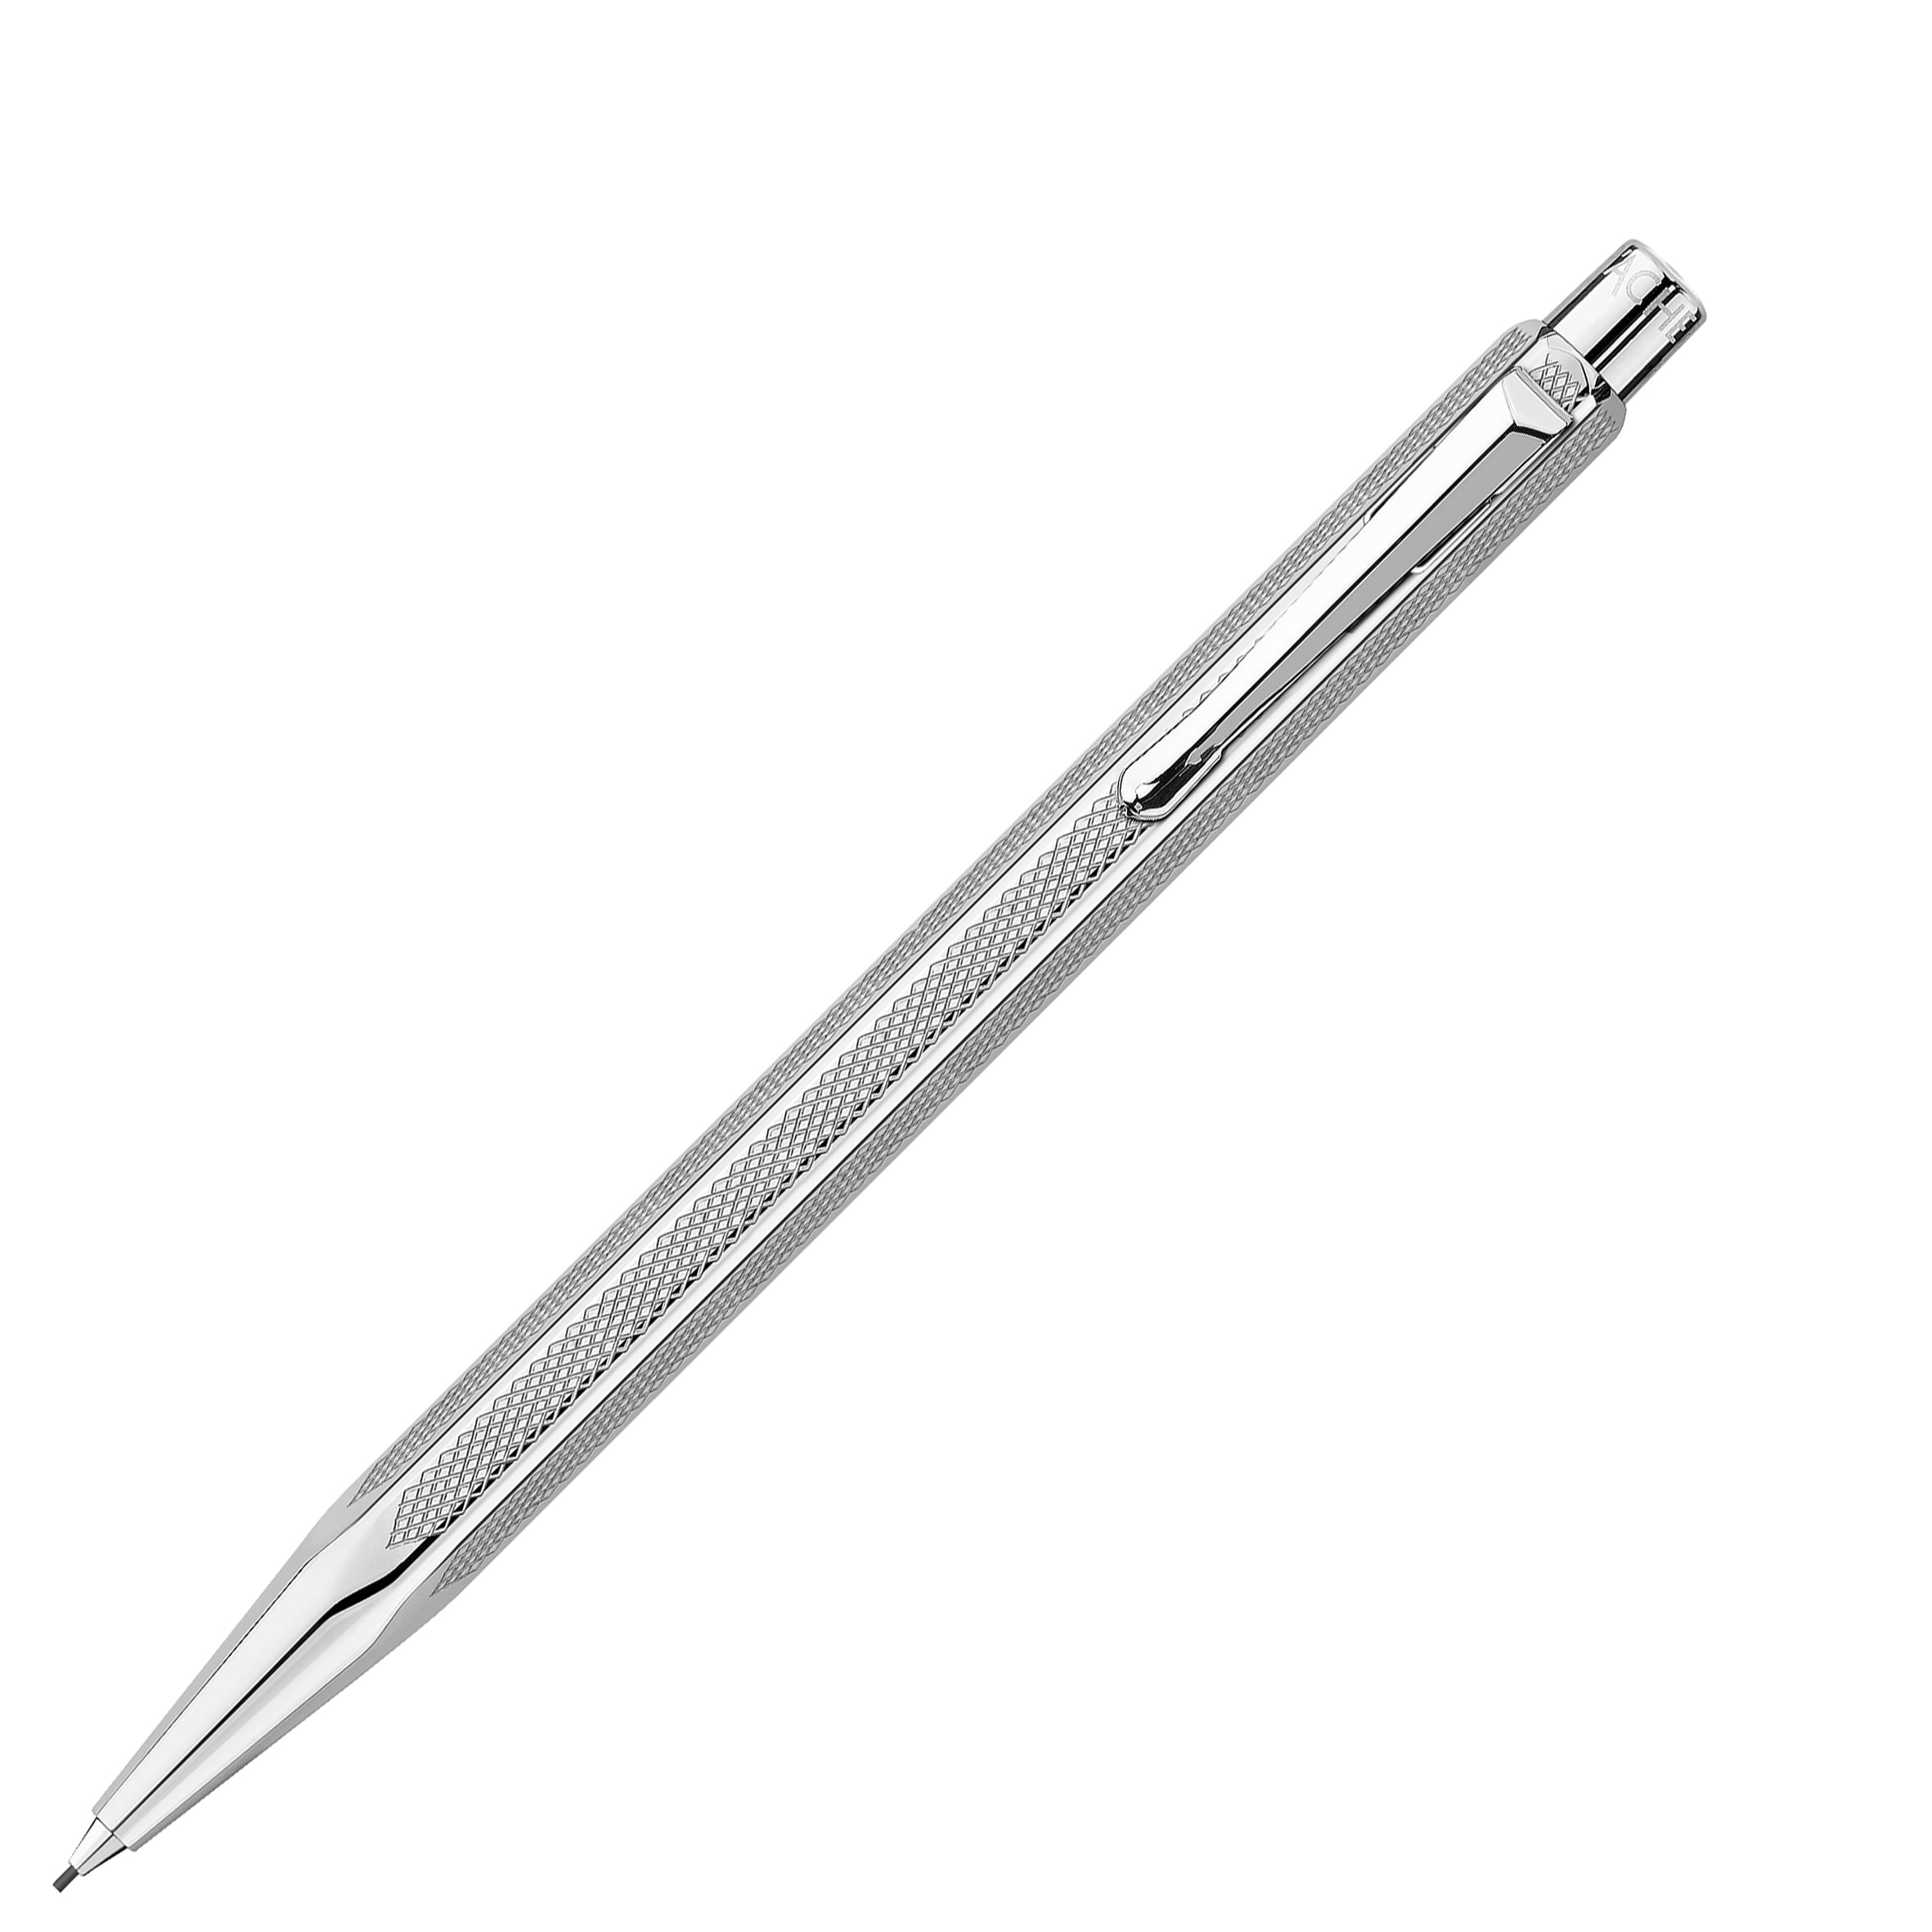 Caran d'Ache Ecridor Retro Palladium Mechanical Pencil